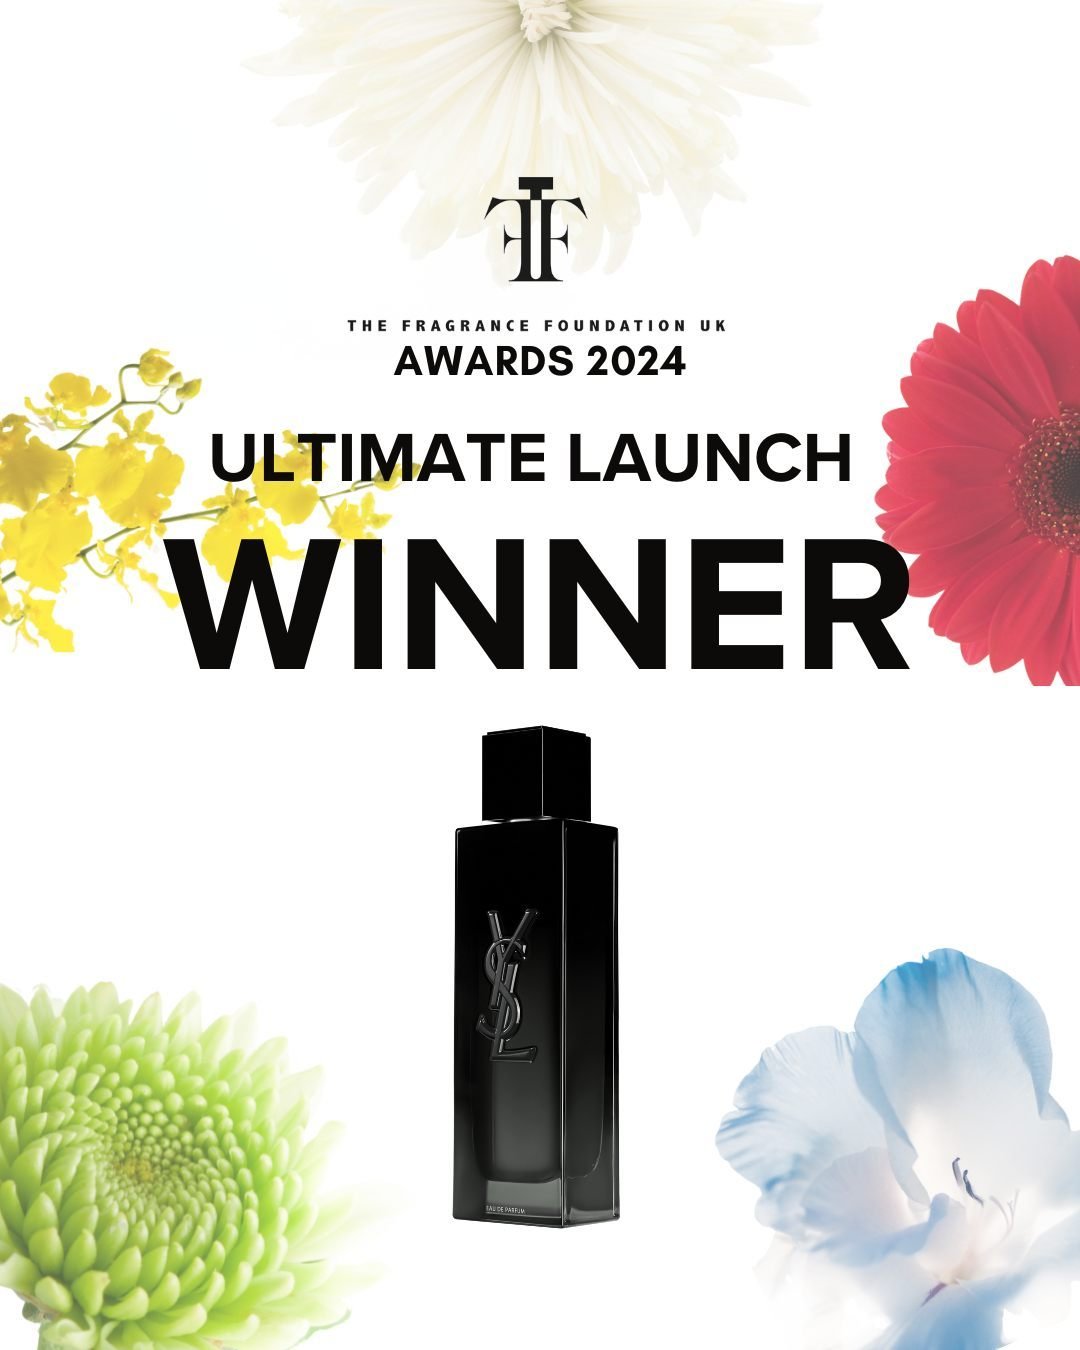 Winner of The Fragrance Foundation UK Ultimate Launch Award... 
Yves Saint Laurent (@yslbeauty) - MYSLF by @givaudanperfume Perfumer Christophe Raynaud! Congratulations!

#TFFAwards2024 #Winner #FragranceAwards #Fragrance #FragranceLover #FragranceCe